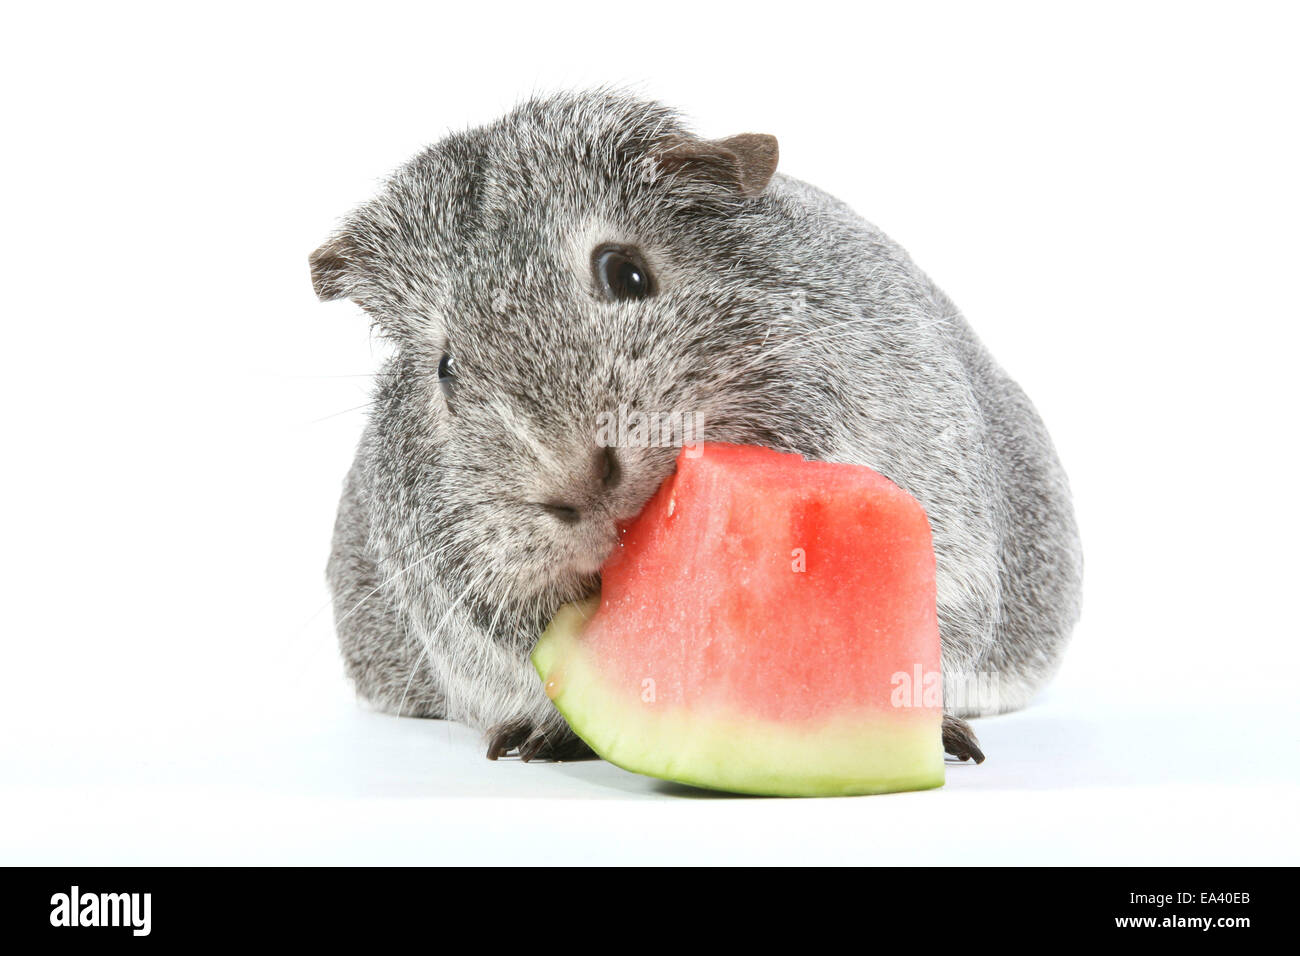 guinea pig eats melon Stock Photo